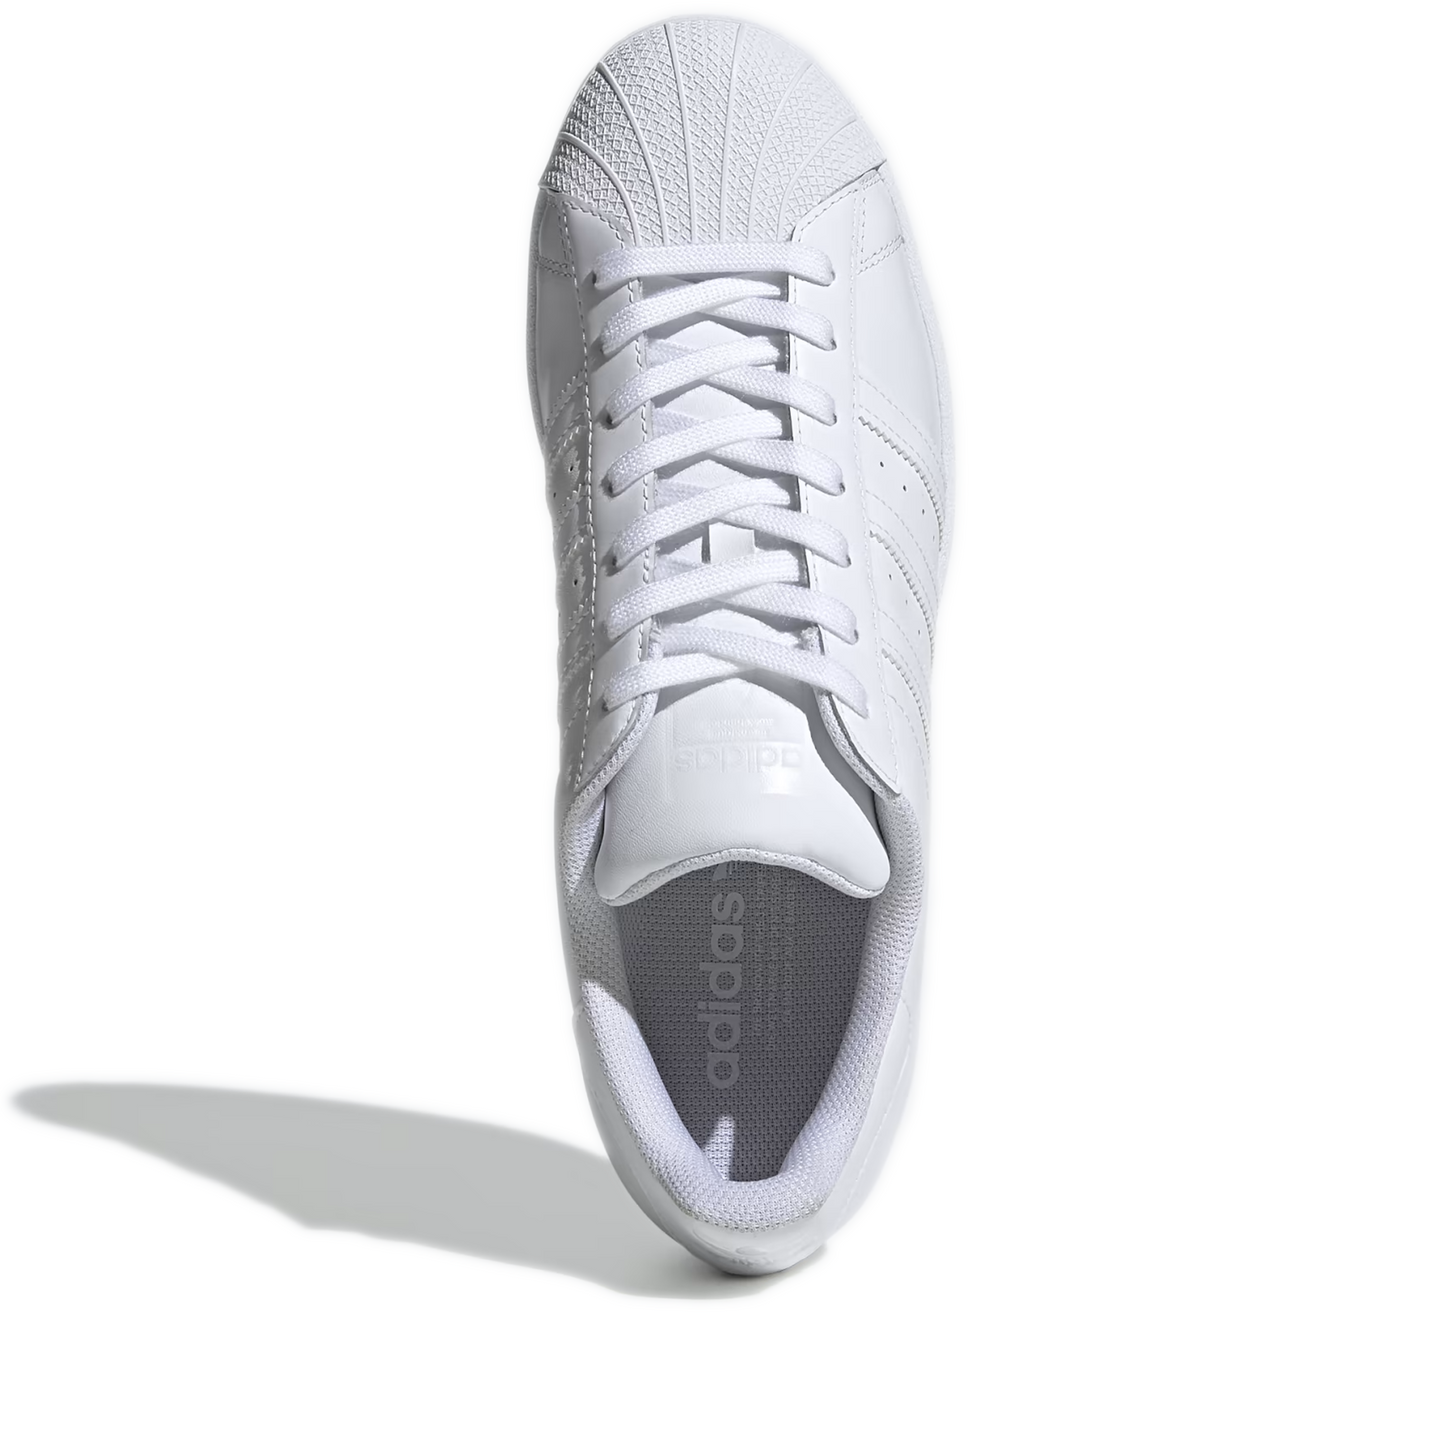 Men's Adidas Superstar Shoes - White